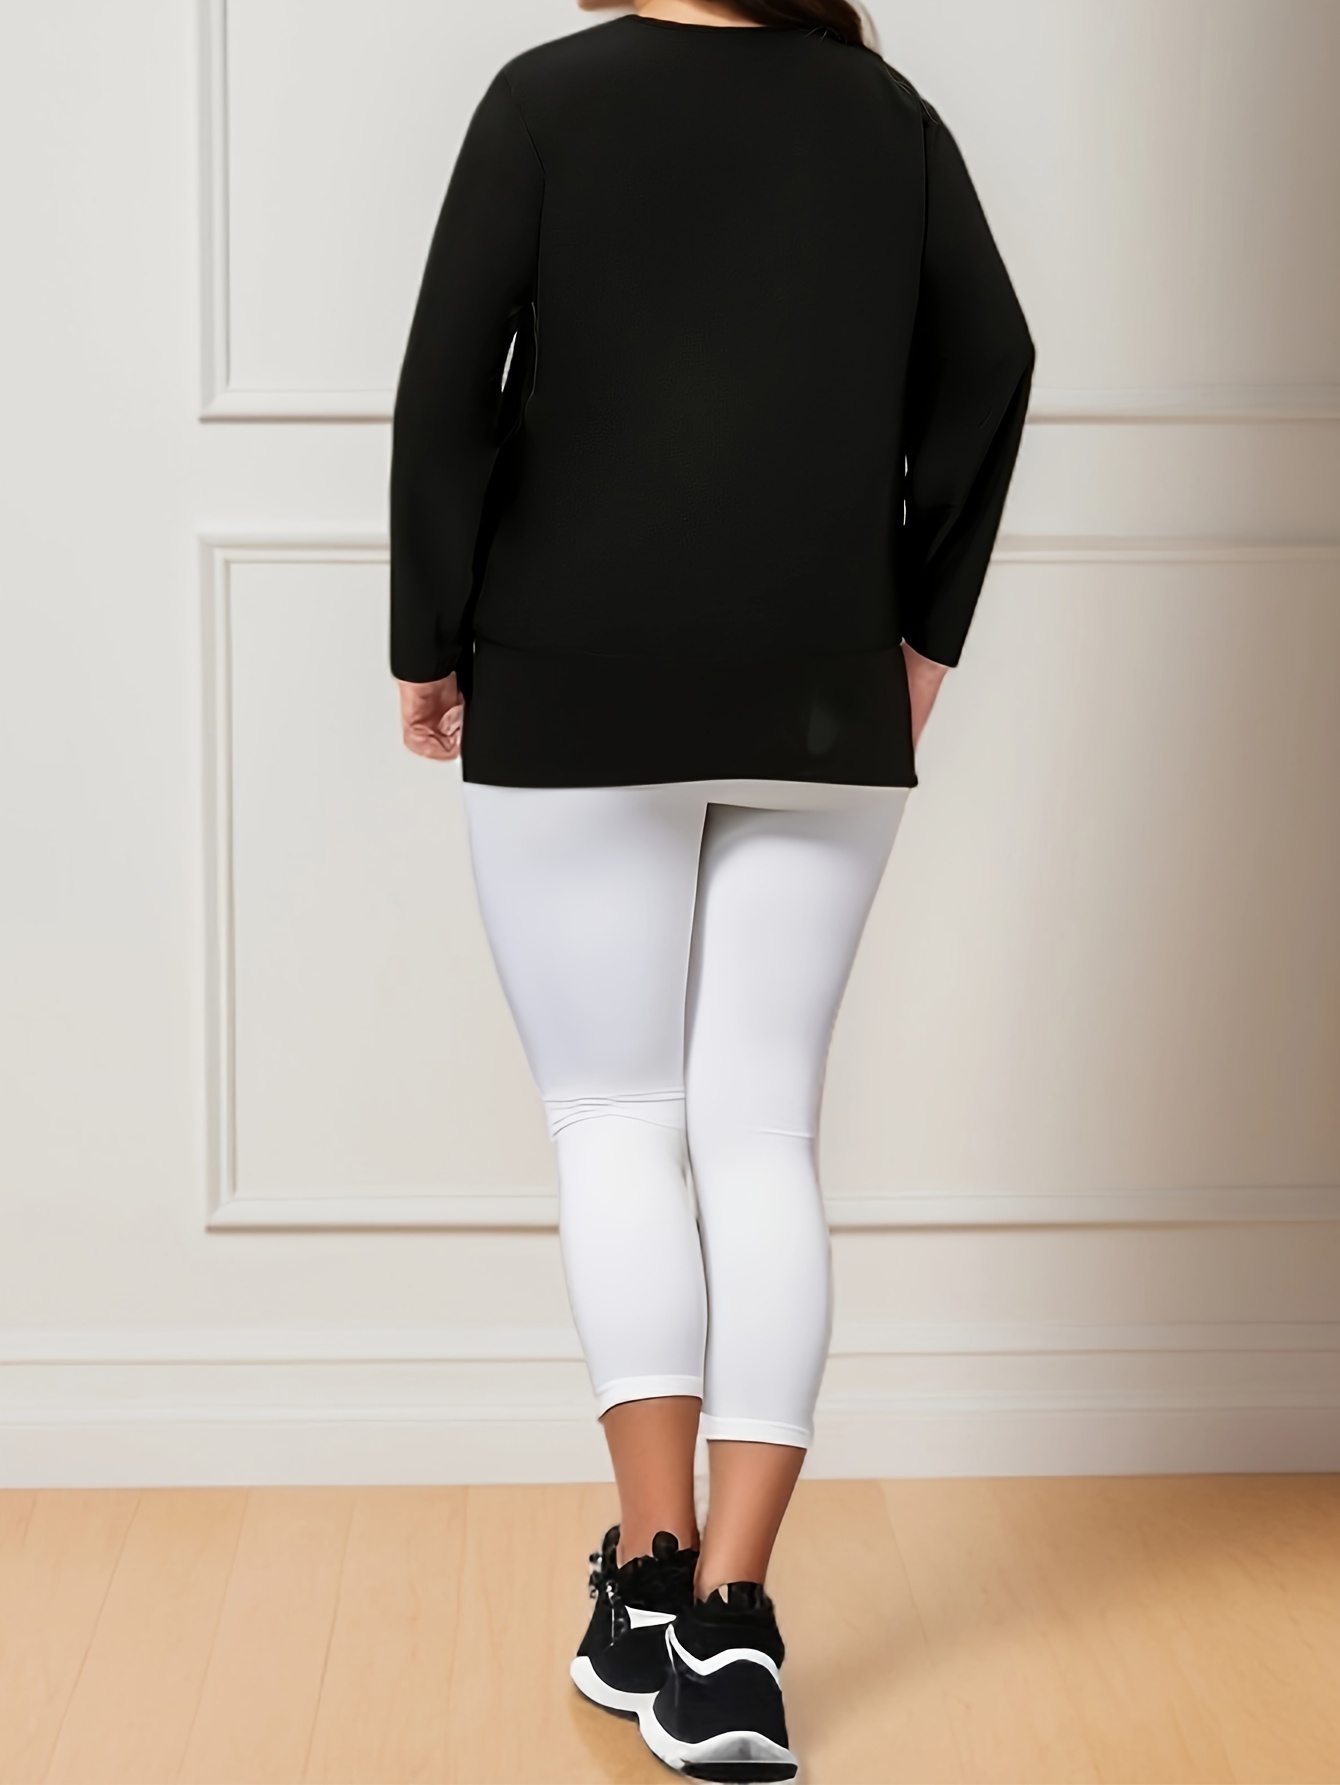 Spanx Perfect Length Sweatshirt Dolman Sleeve Black 3/4 Sleeves